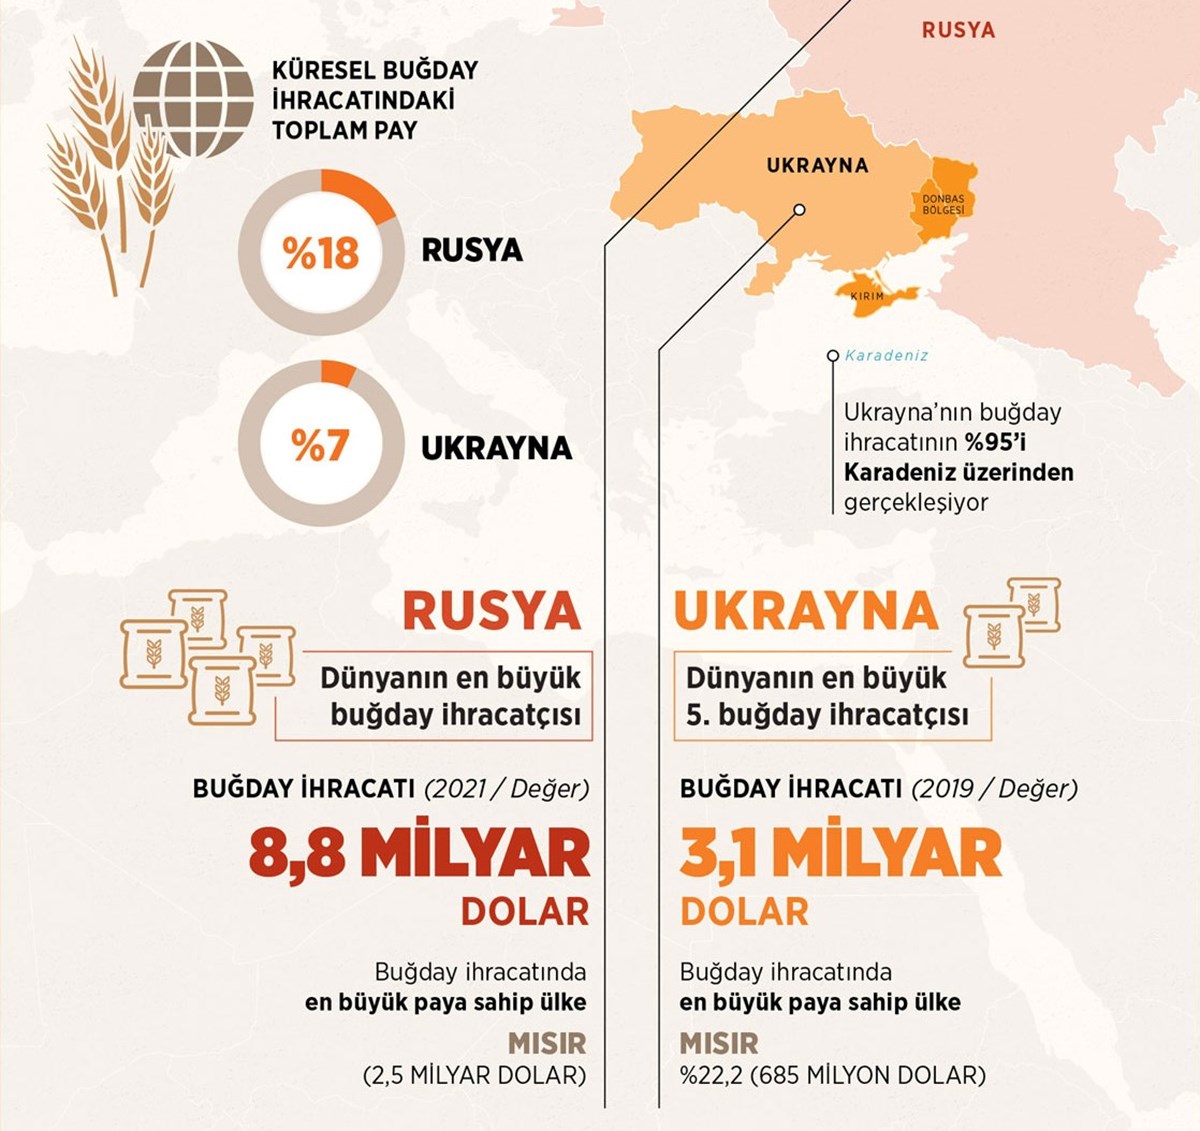 Küresel buğday piyasasında Ukrayna ve Rusya